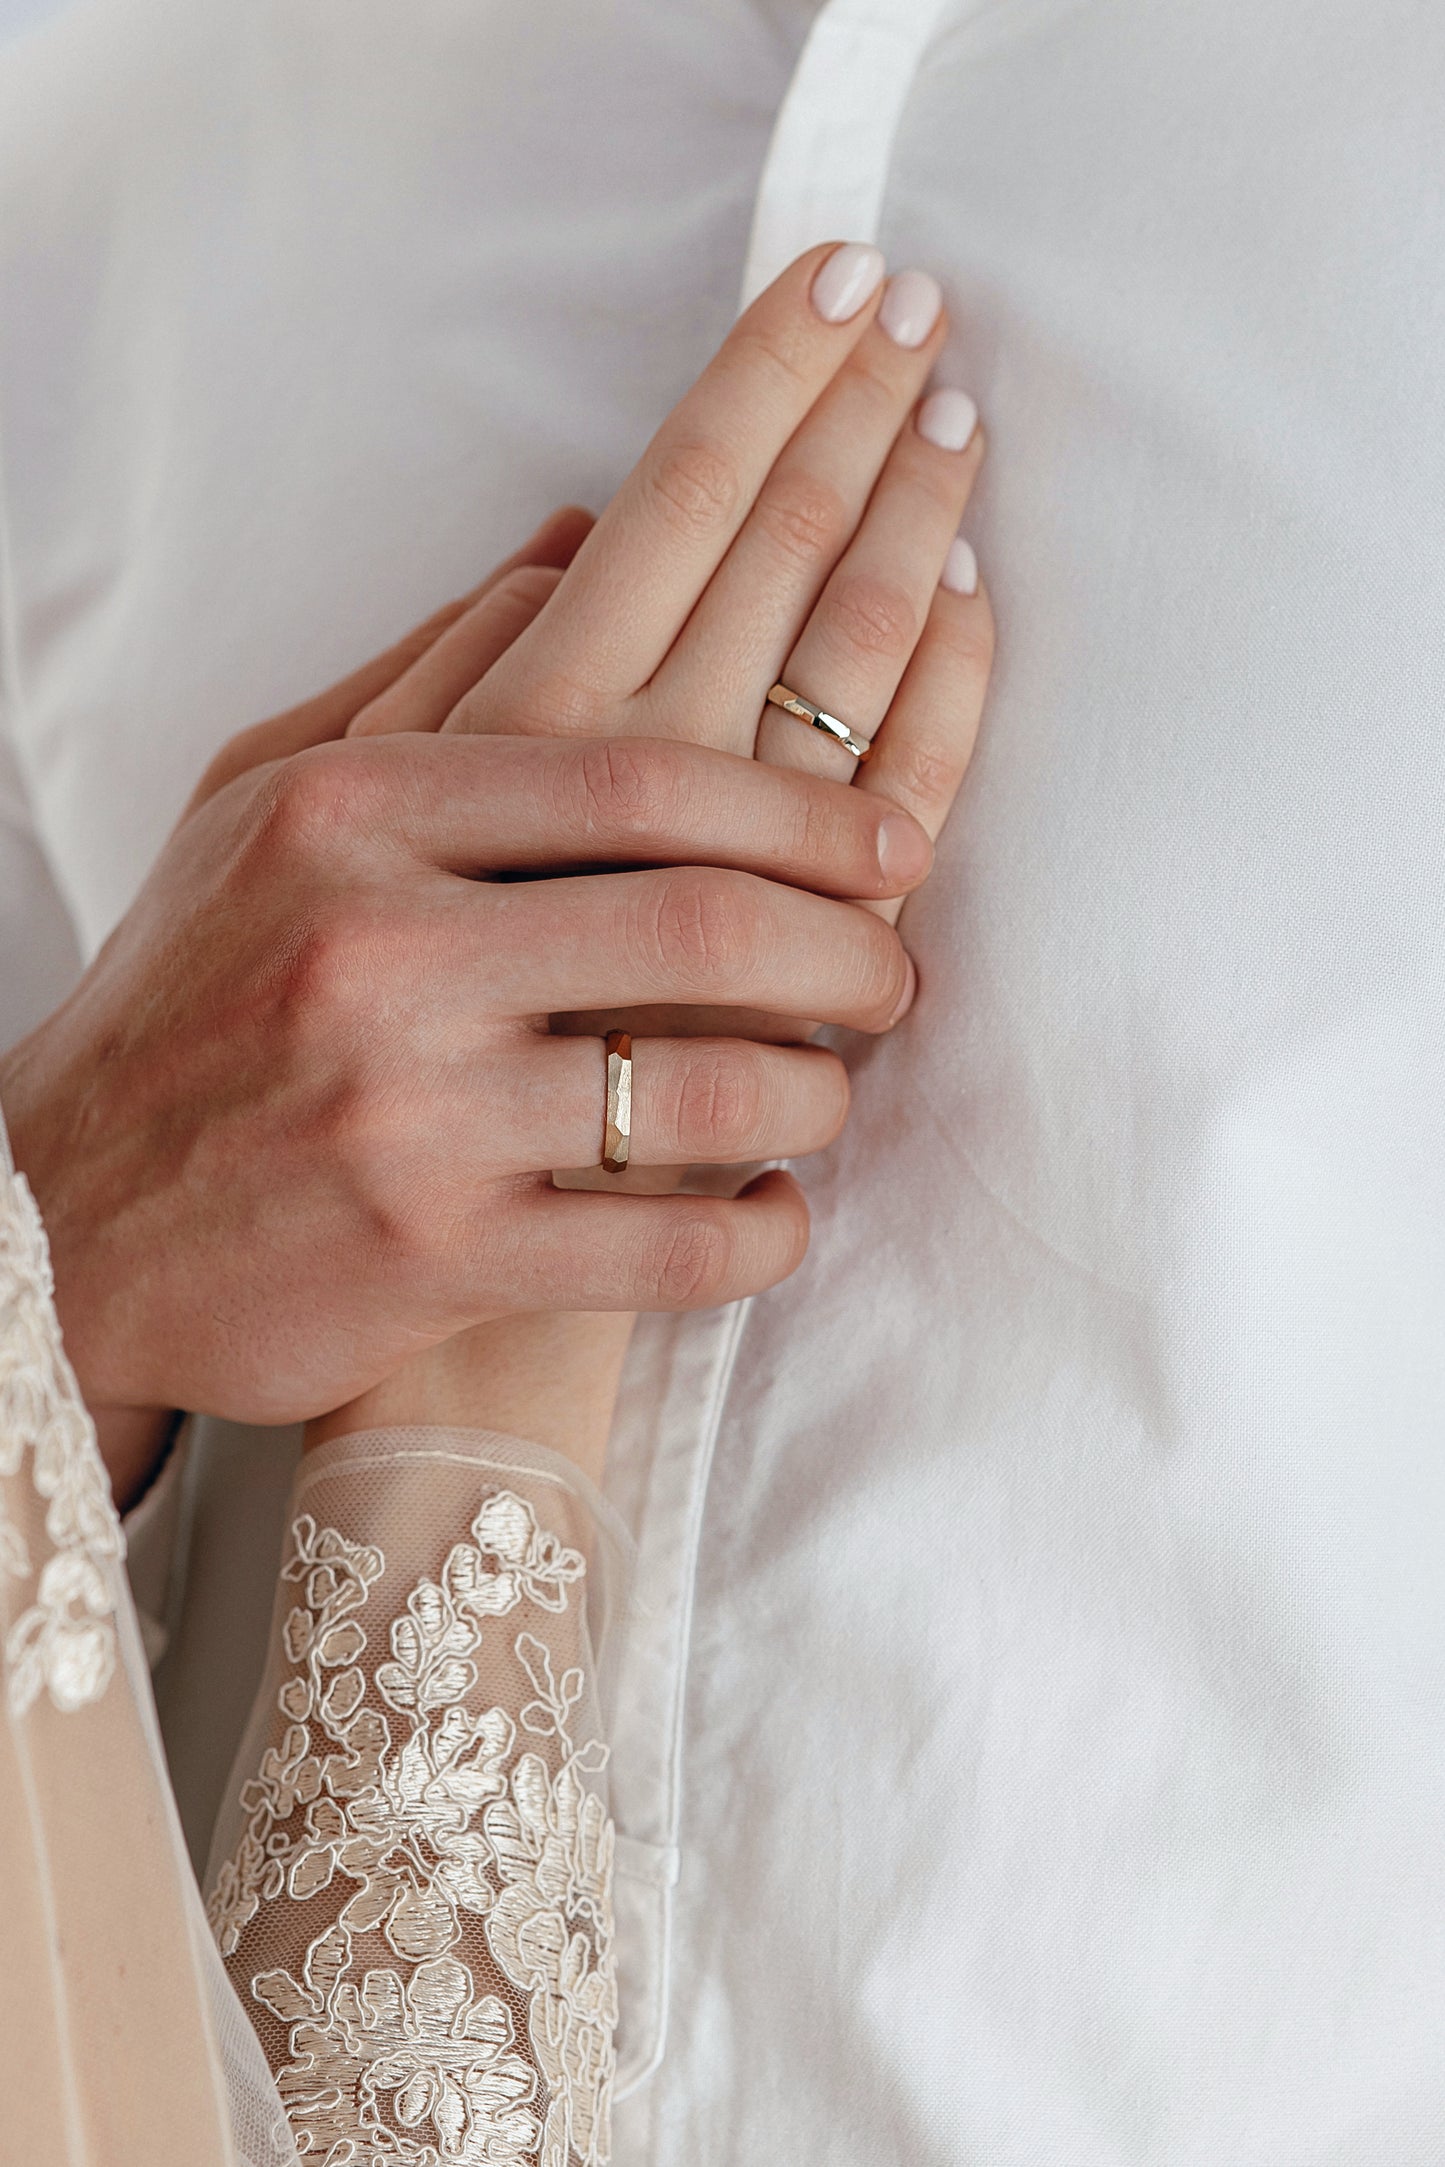 Couple wedding bands. Unique wedding rings. Facette wedding bands. Gold wedding rings set. His and hers wedding bands. Matching wedding rings set.